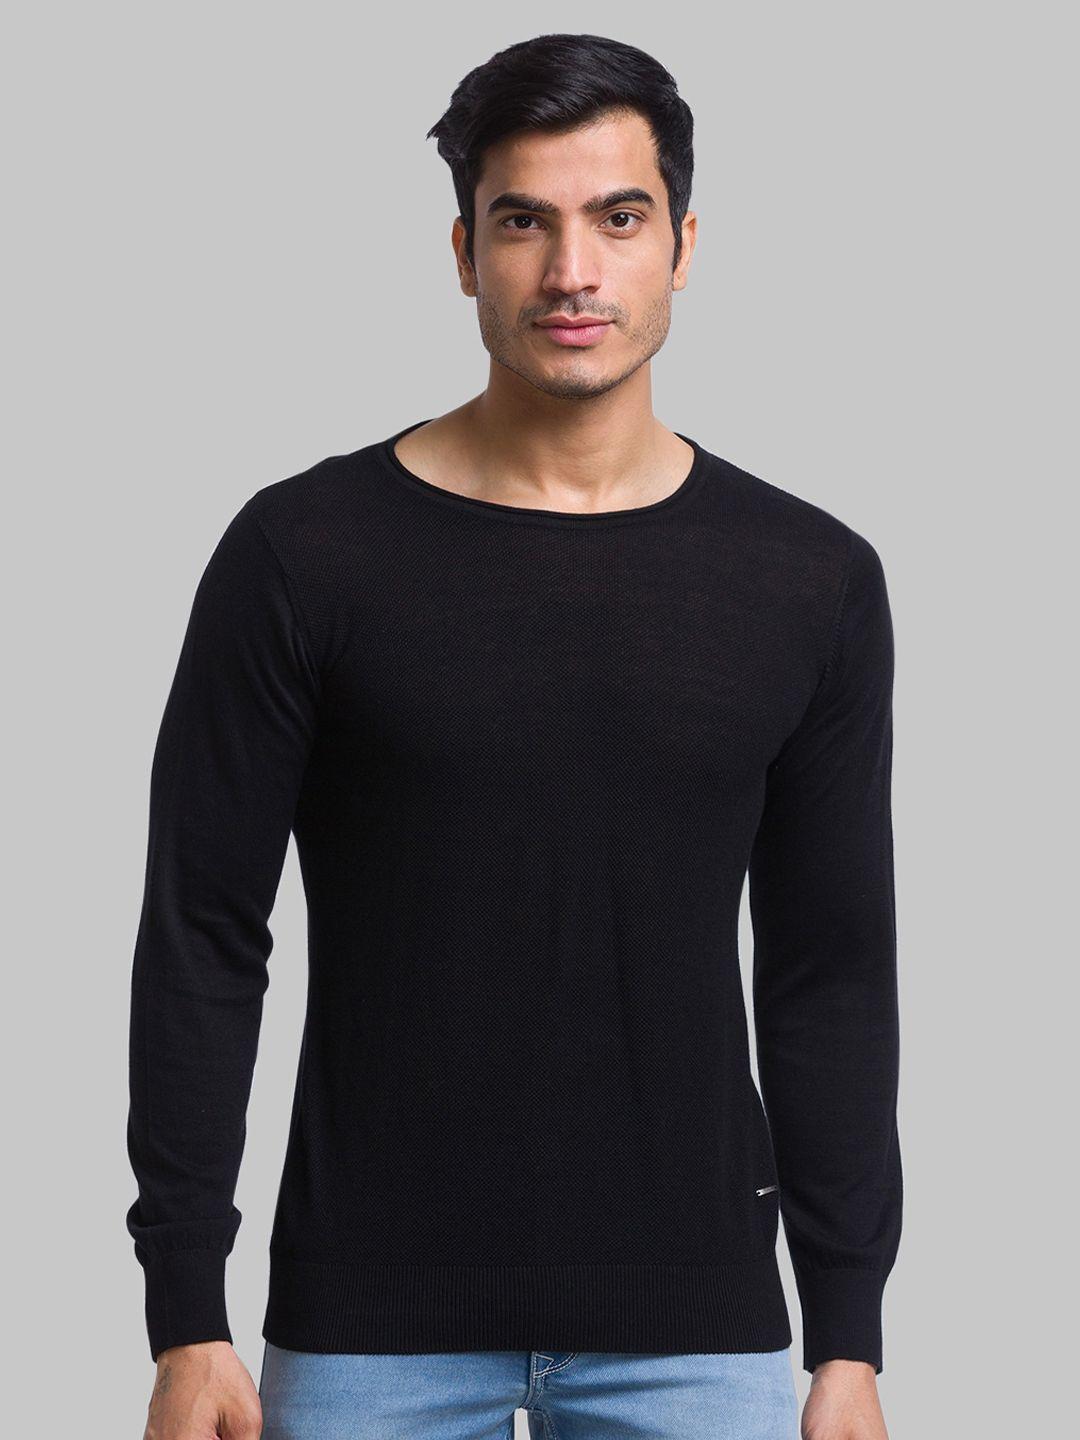 parx-men-cotton-pullover-sweater